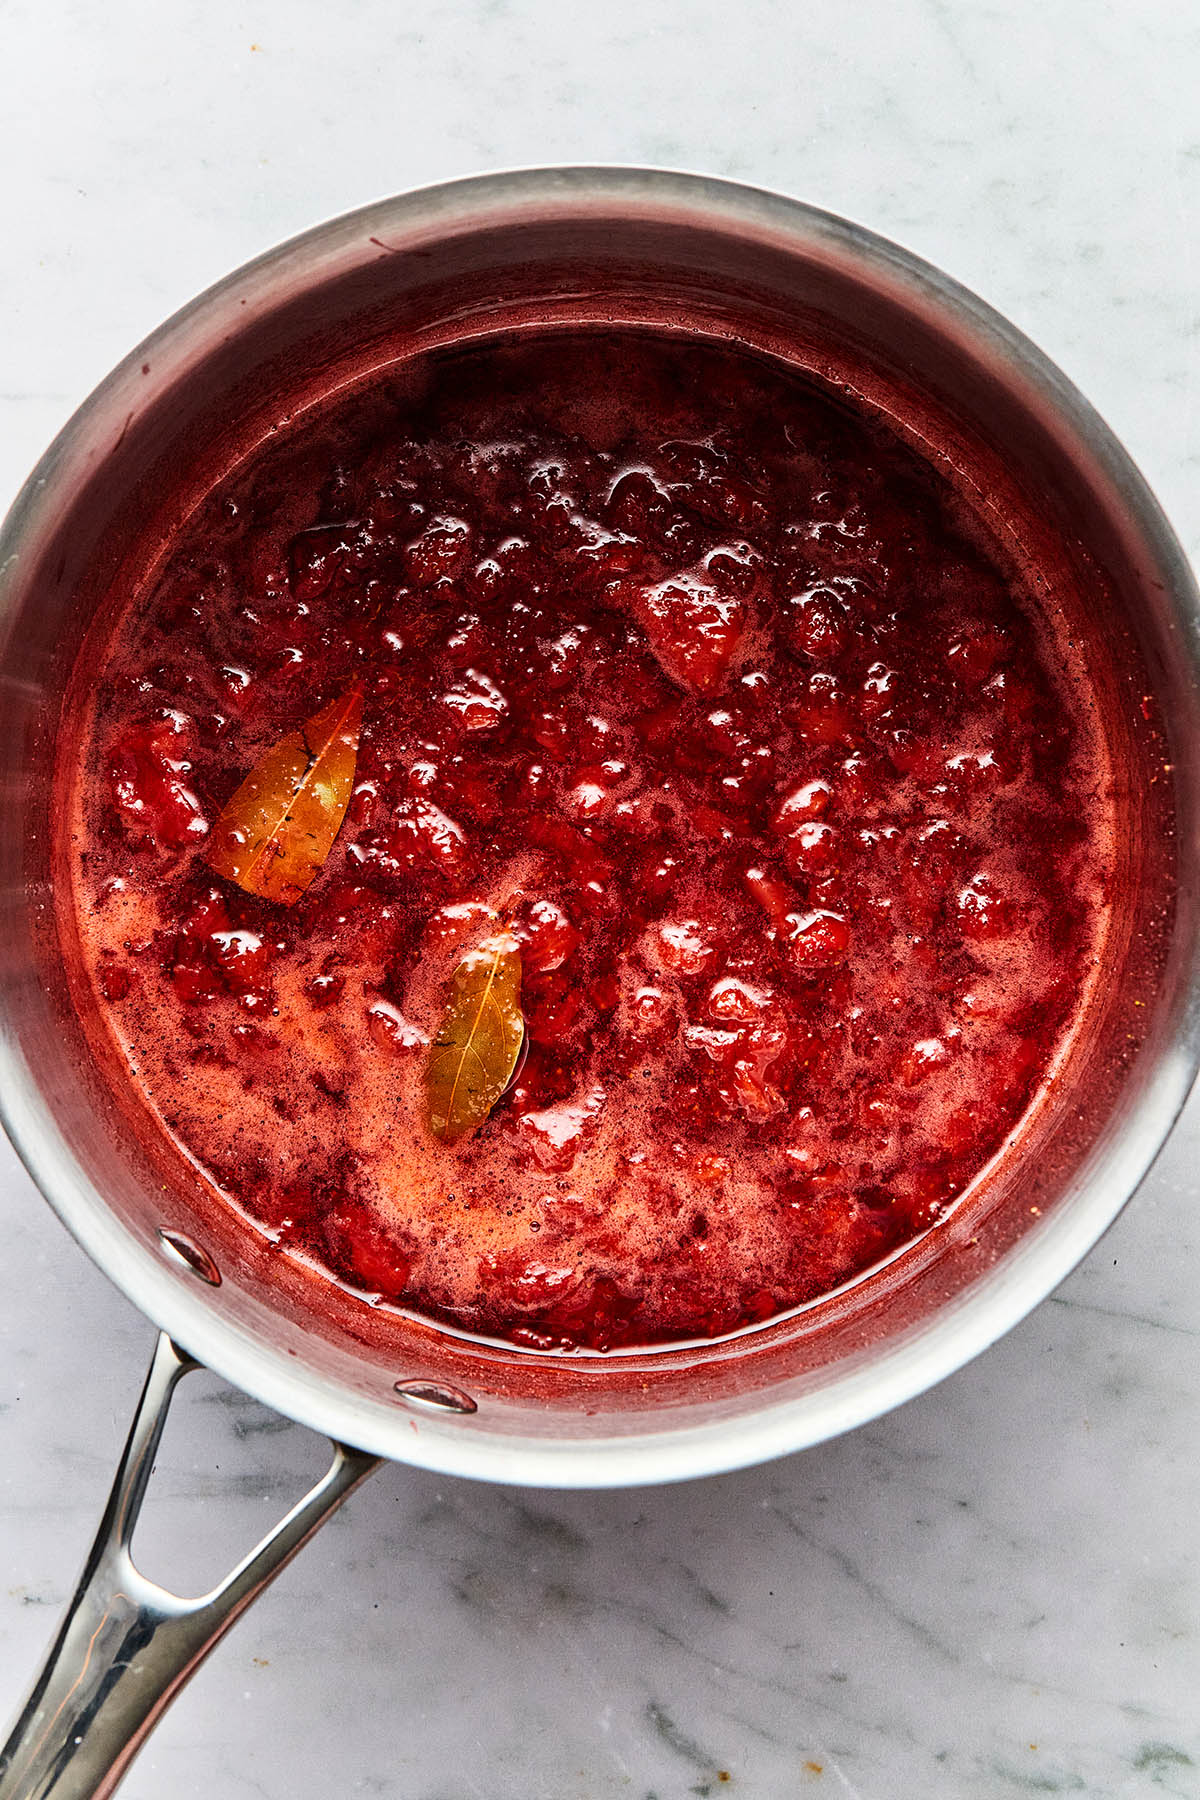 Overhead image of a pot of homemade jam.